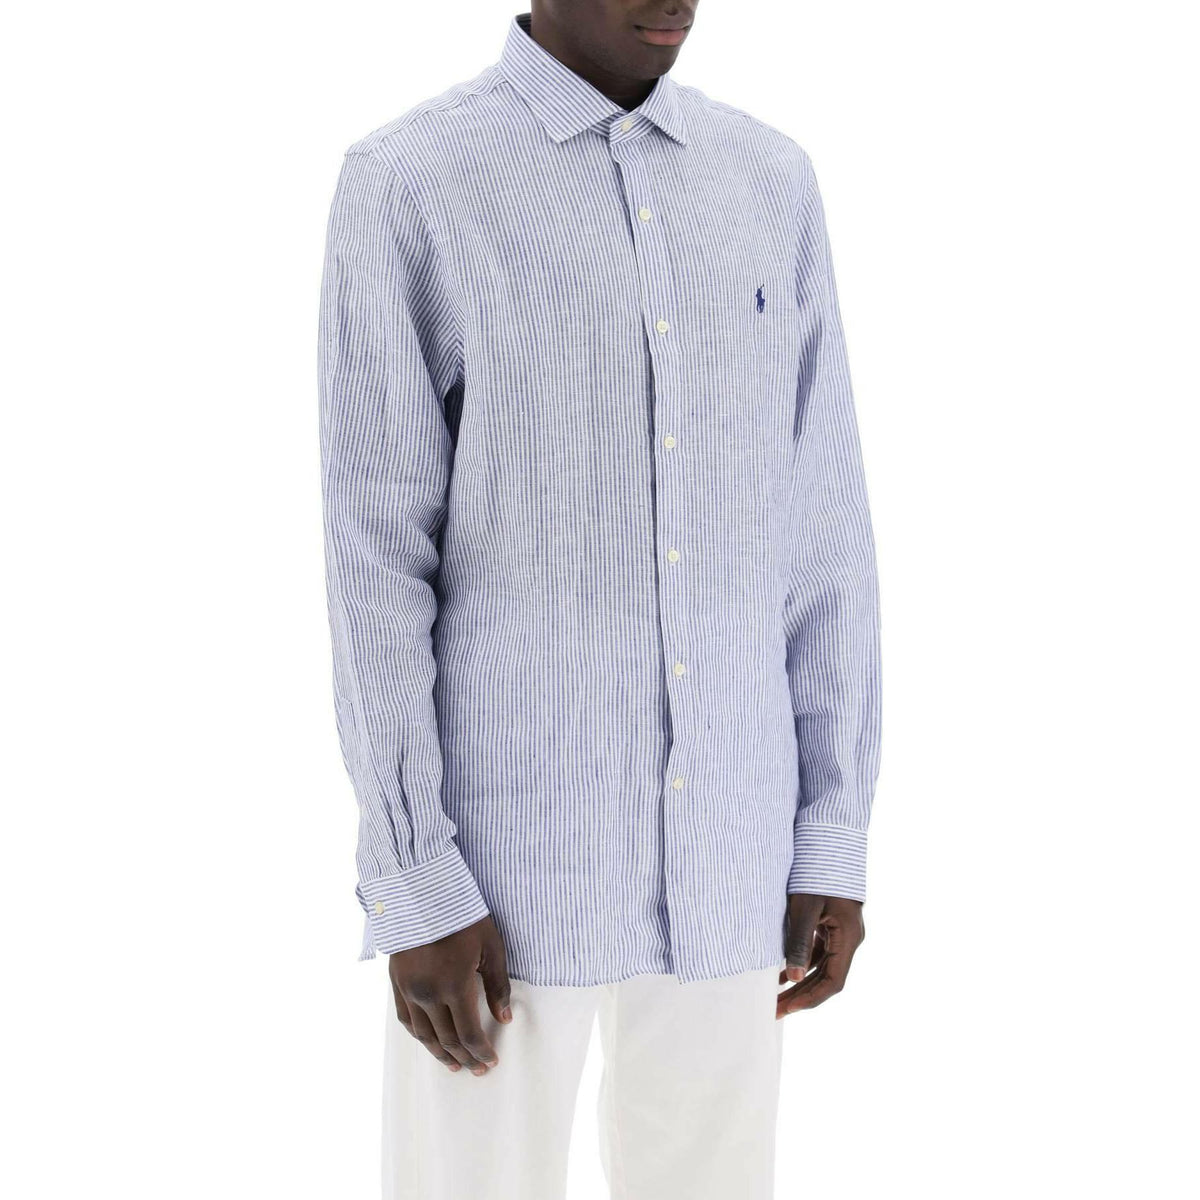 POLO RALPH LAUREN - Royal White and Blue Striped Slim-Fit Linen Shirt - JOHN JULIA